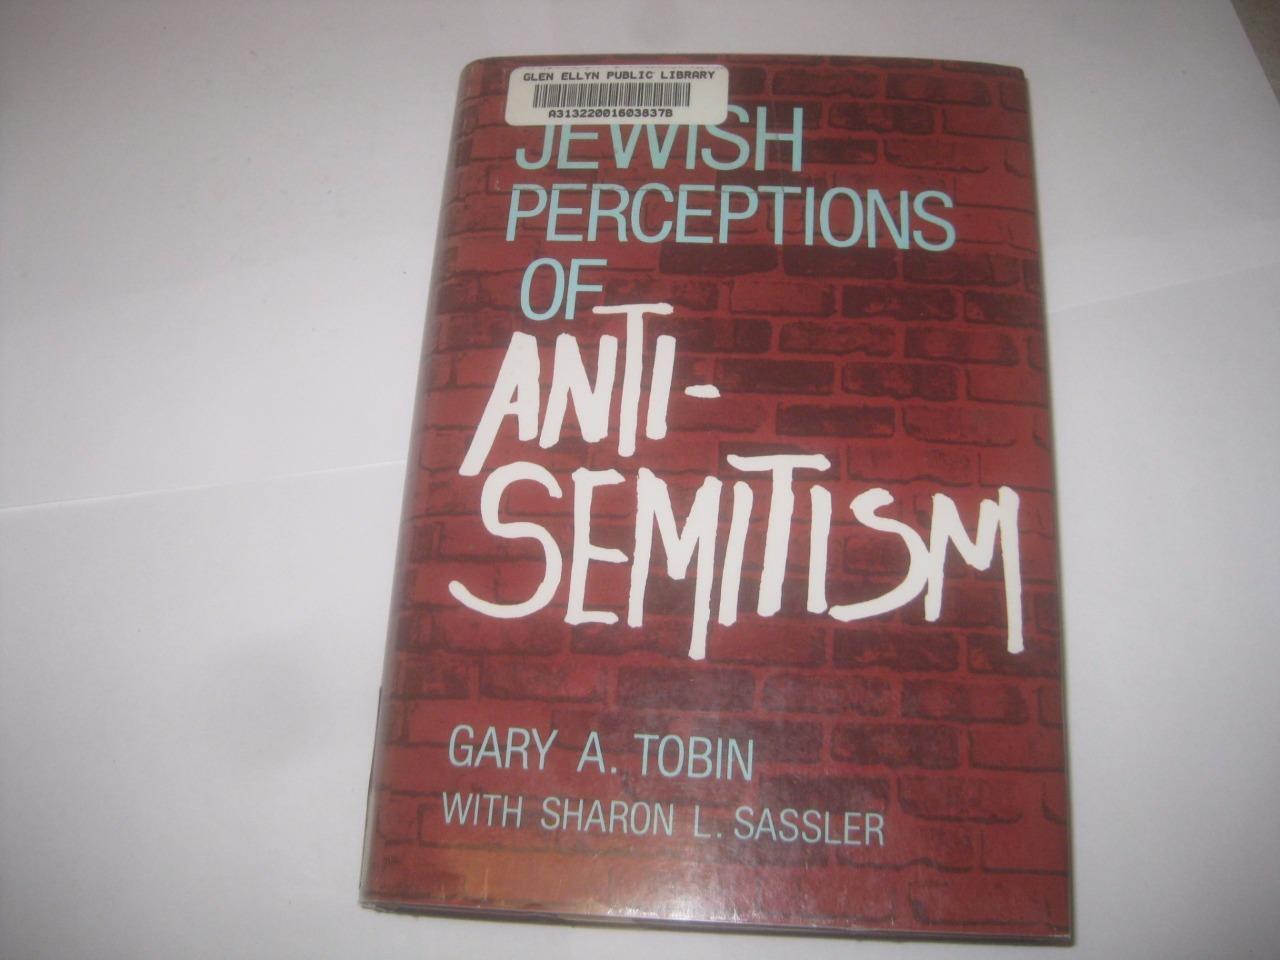 Jewish Perceptions of Antisemitism by Gary A. Tobin